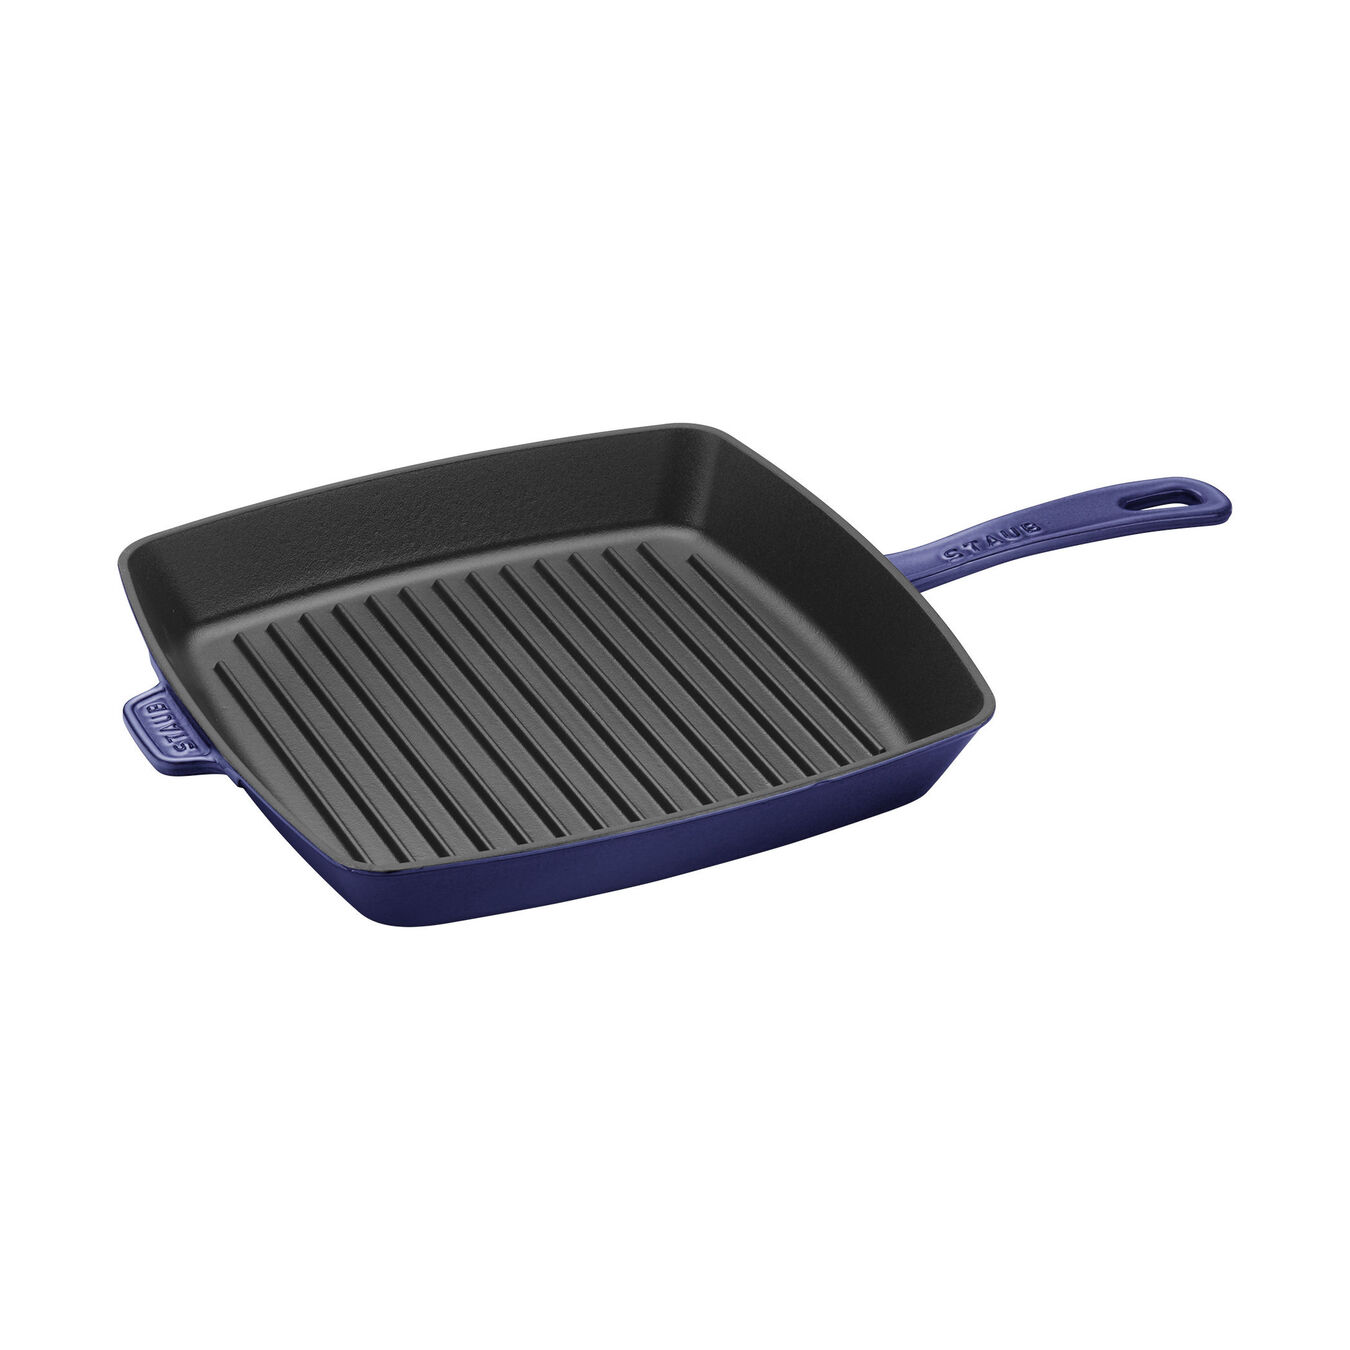 26 cm cast iron square American grill, dark-blue,,large 1